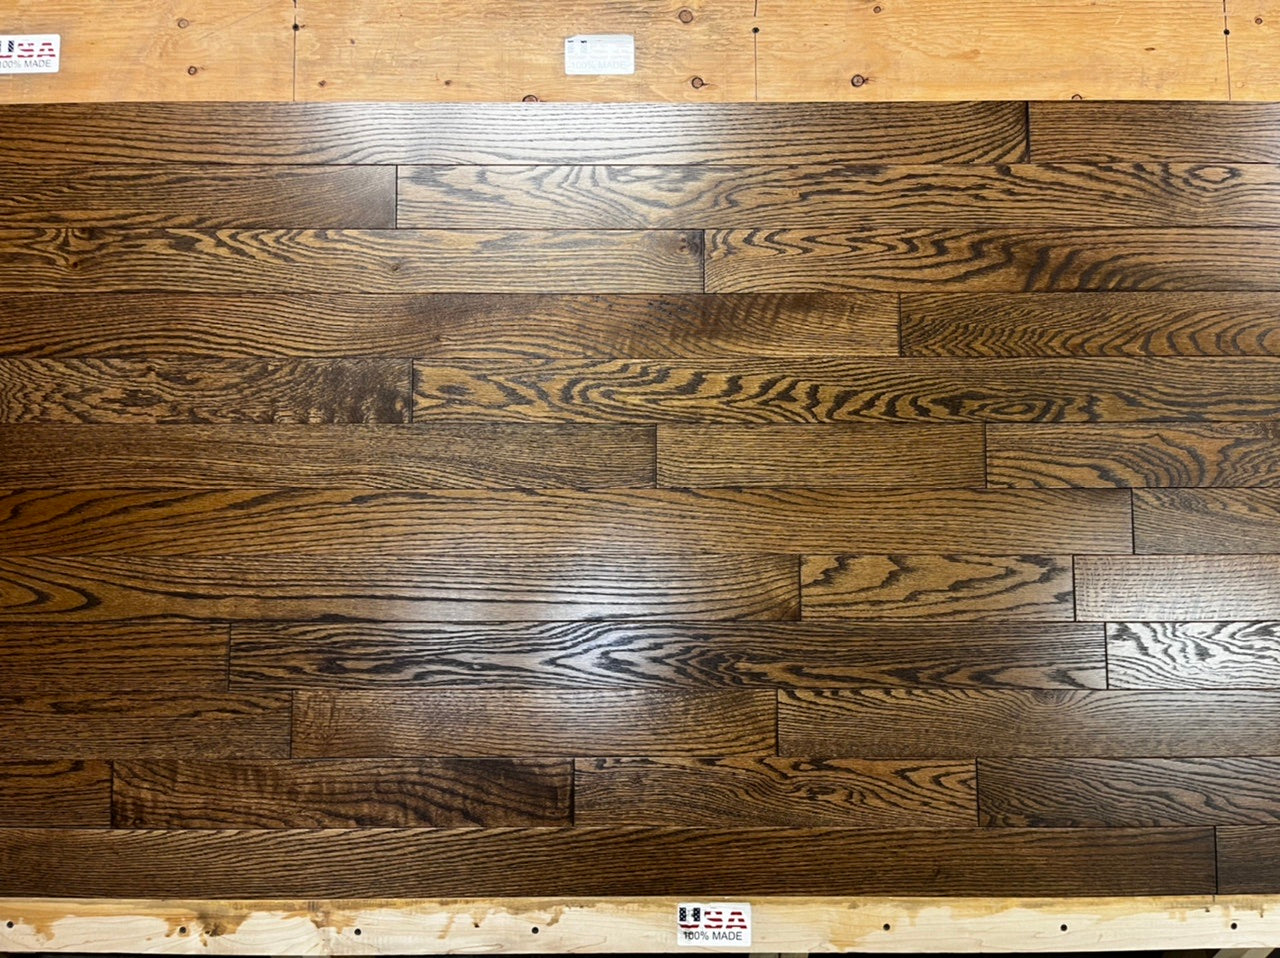 5" x 3/4" Prefinished Red Oak Cognac Stain Hardwood Flooring